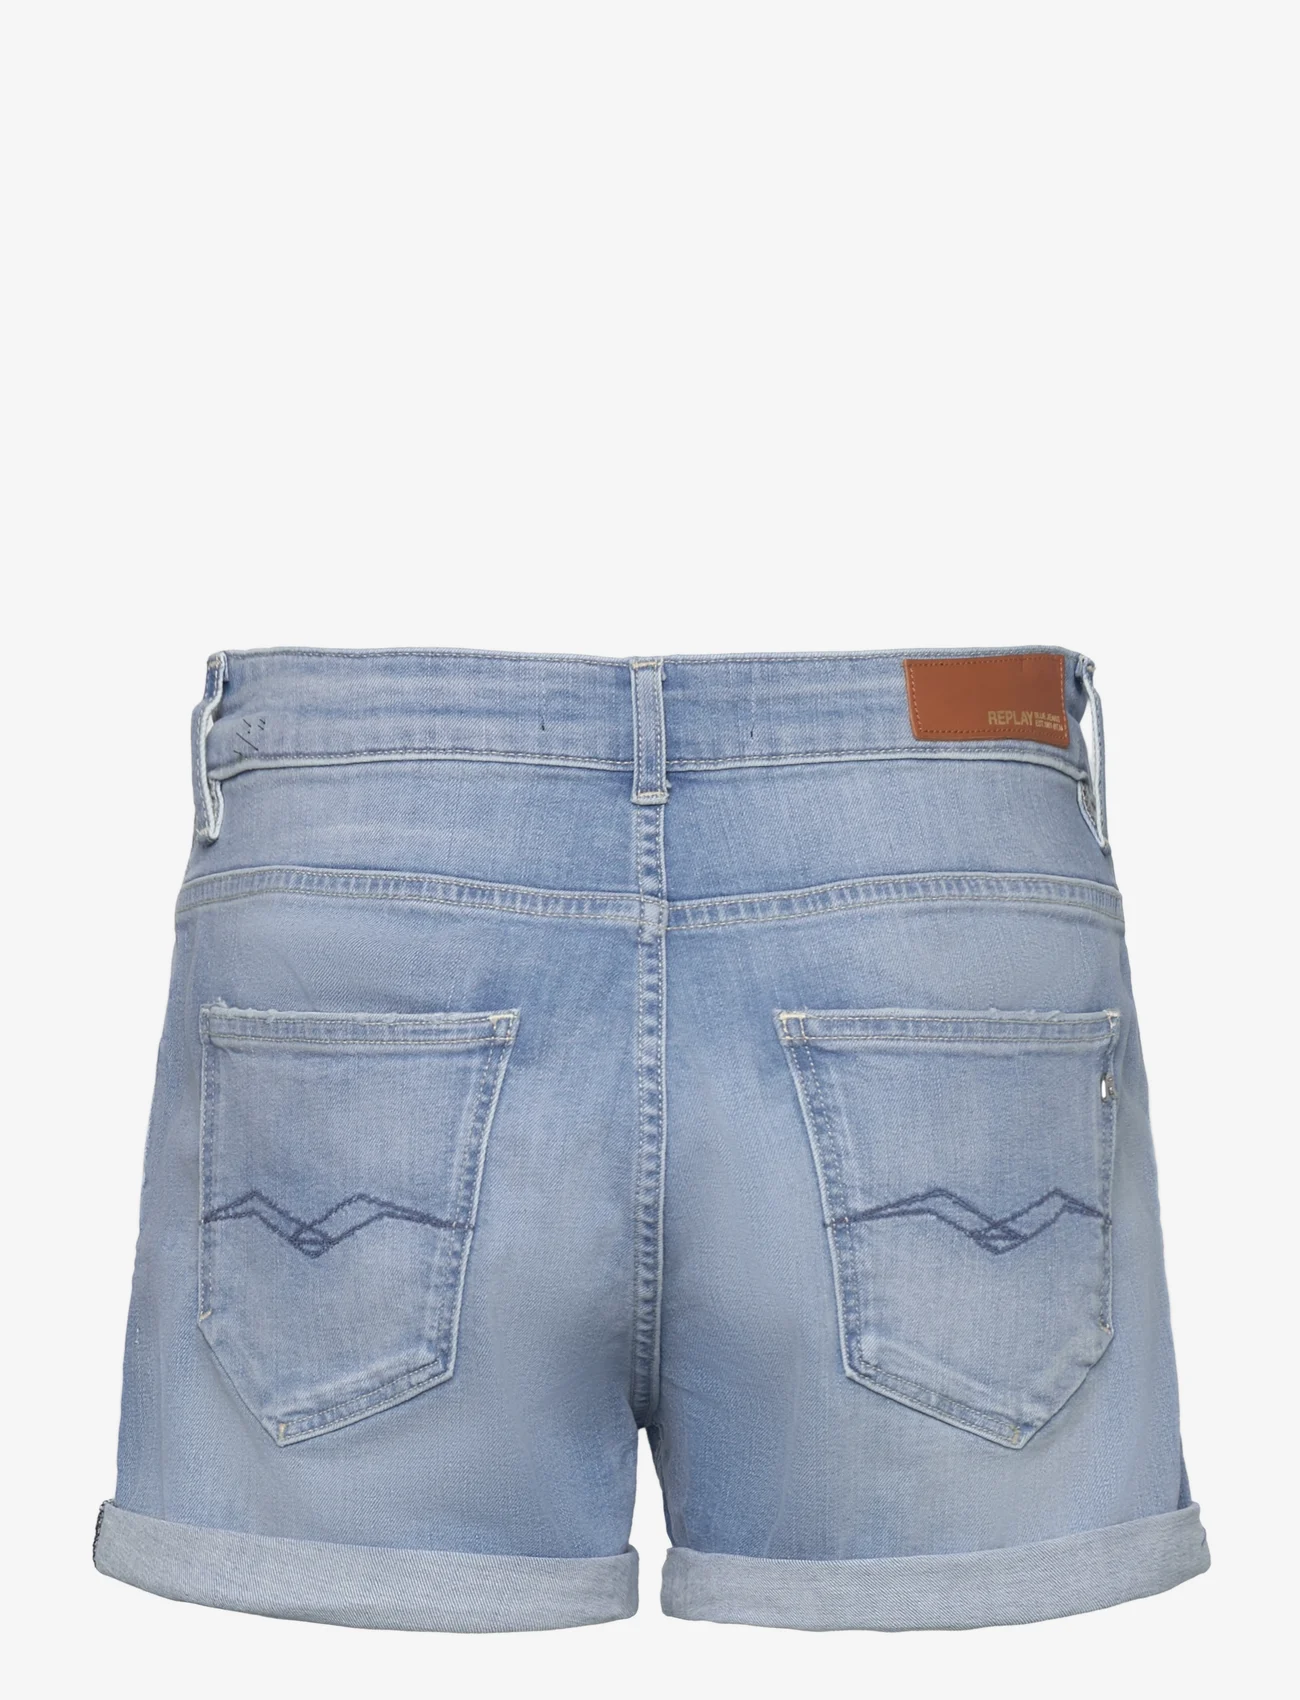 Replay - ANYTA Shorts  573 - jeansowe szorty - blue - 1